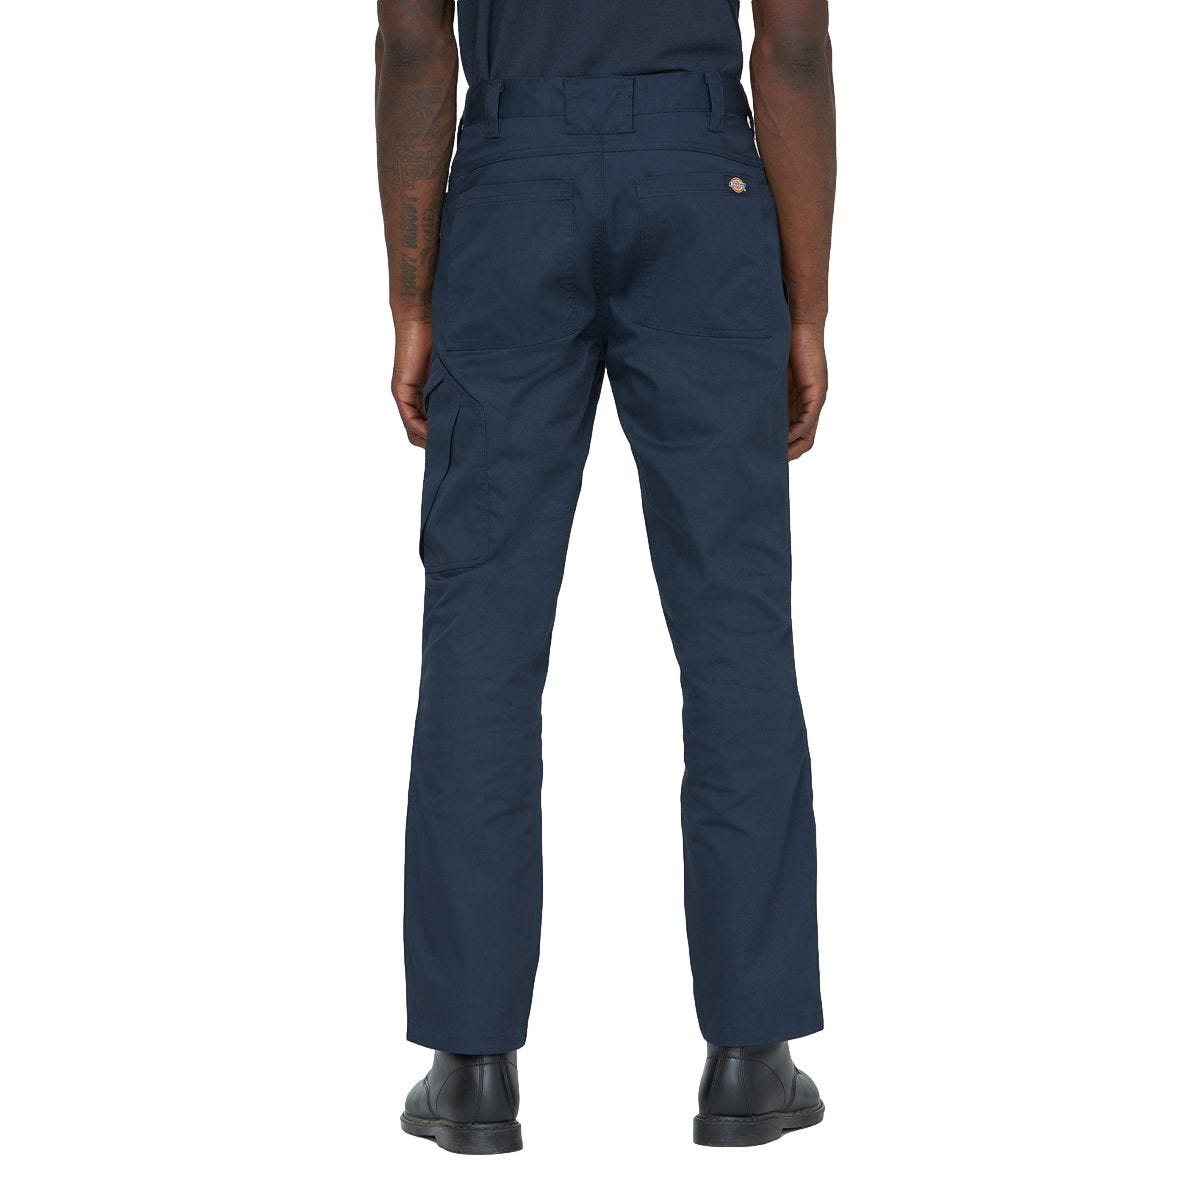 Pantalon de travail Action Flex bleu marine - Dickies - Taille 42 3